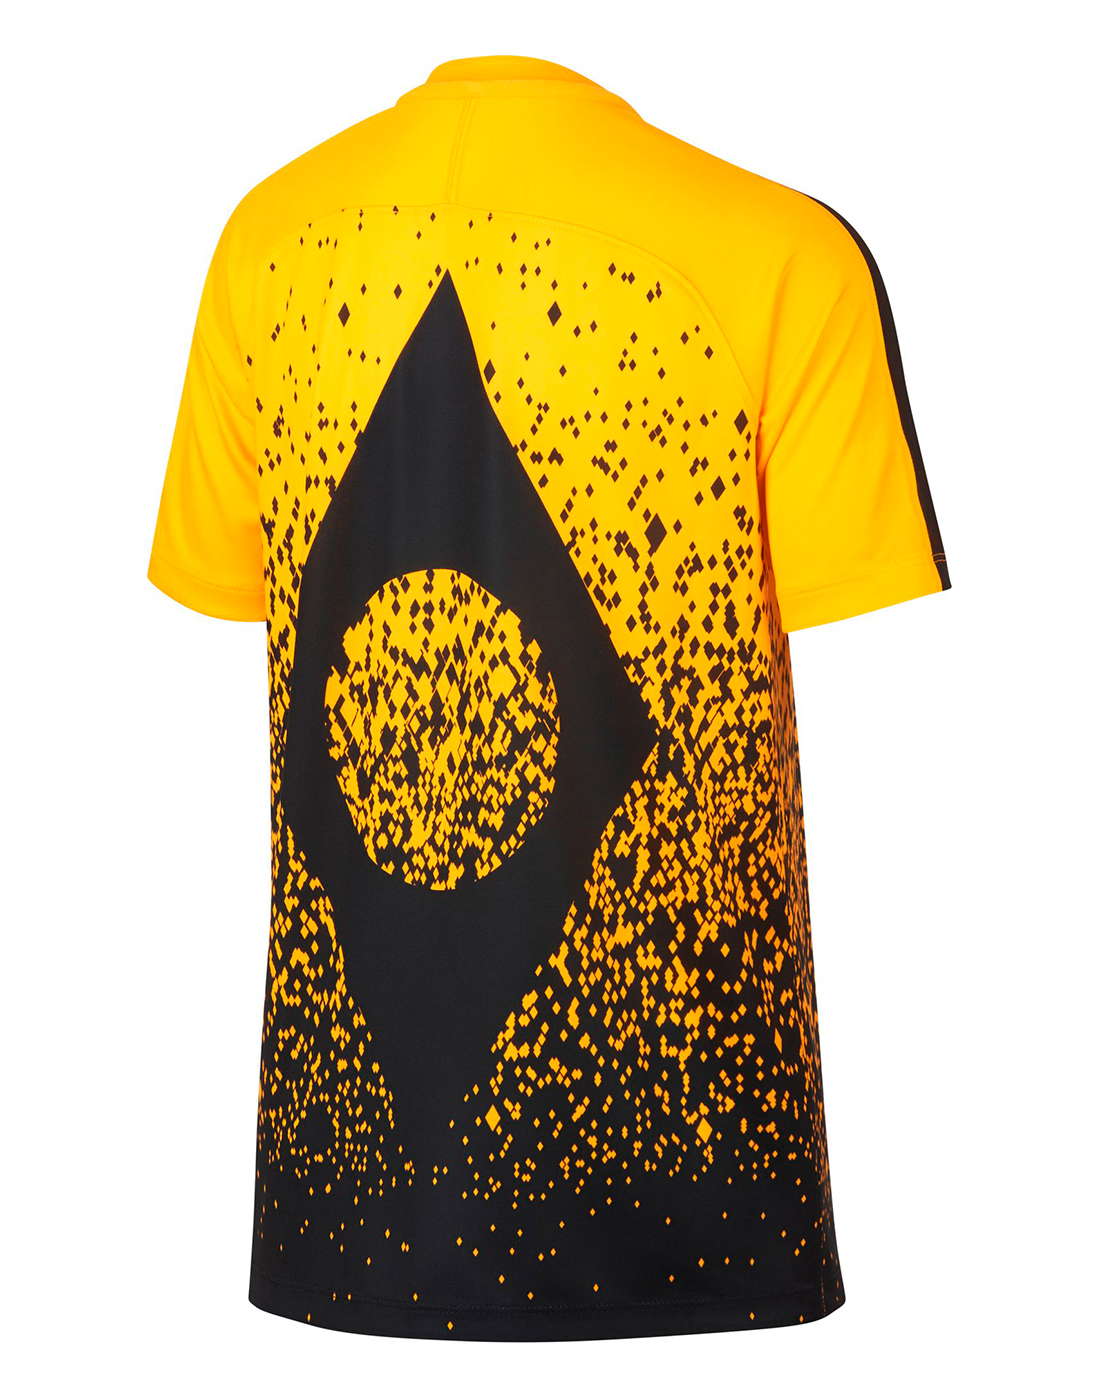 offizielle Kollektion des FC Barcelona / Neymar Jr. Kinder-T-Shirt Bar/ça/ 